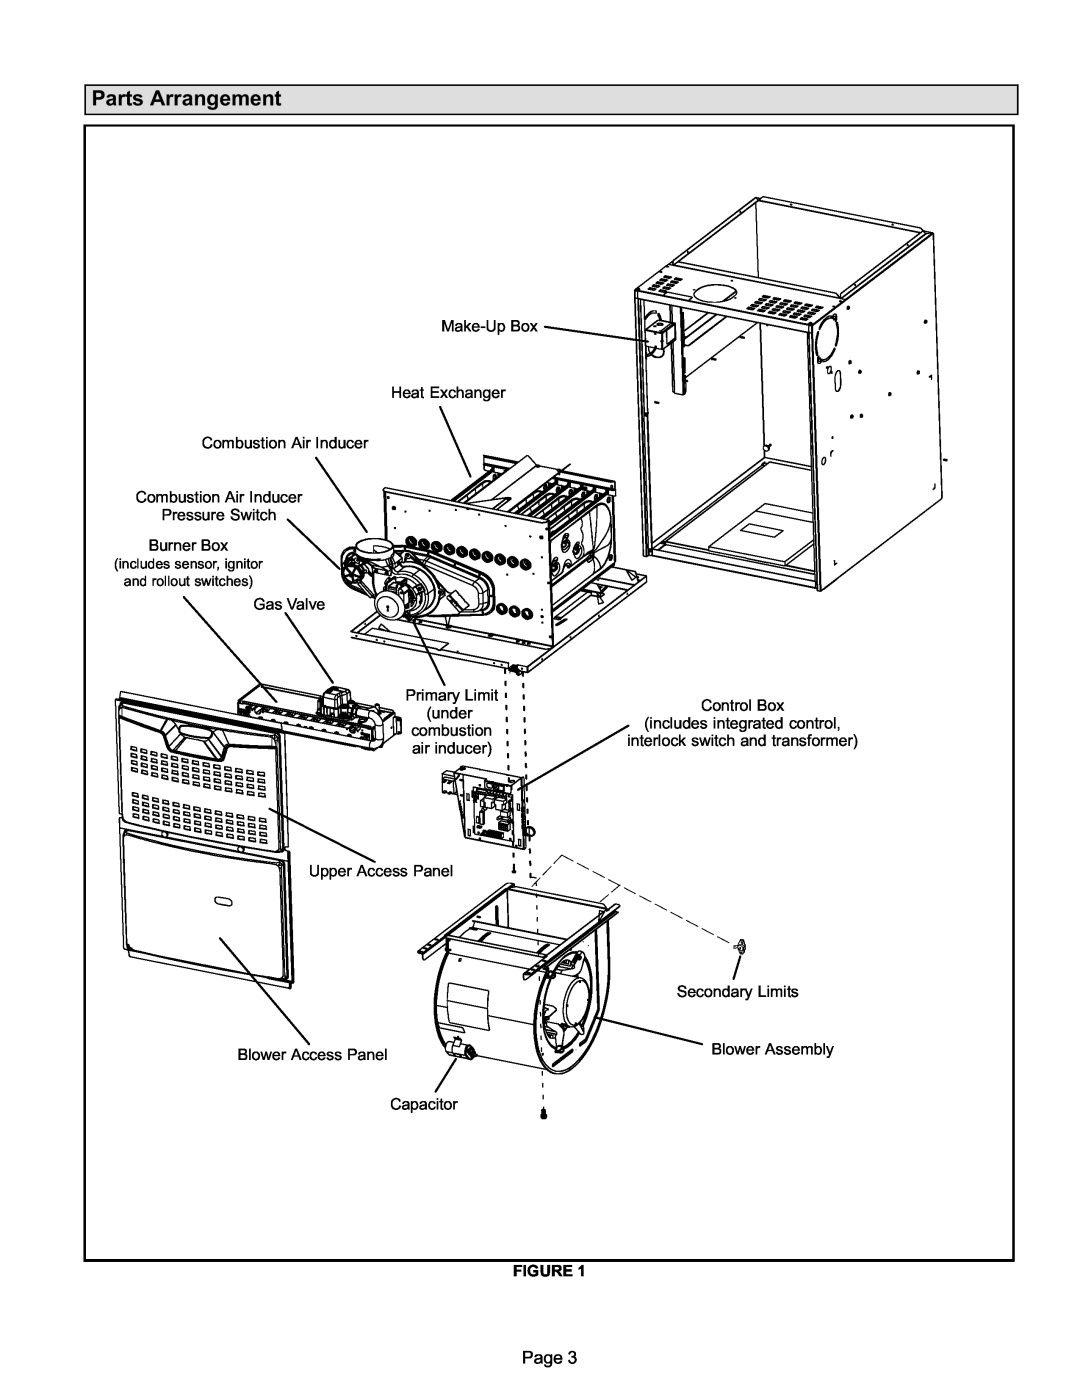 Lennox International Inc Merit Series Gas Furnace installation instructions Parts Arrangement 